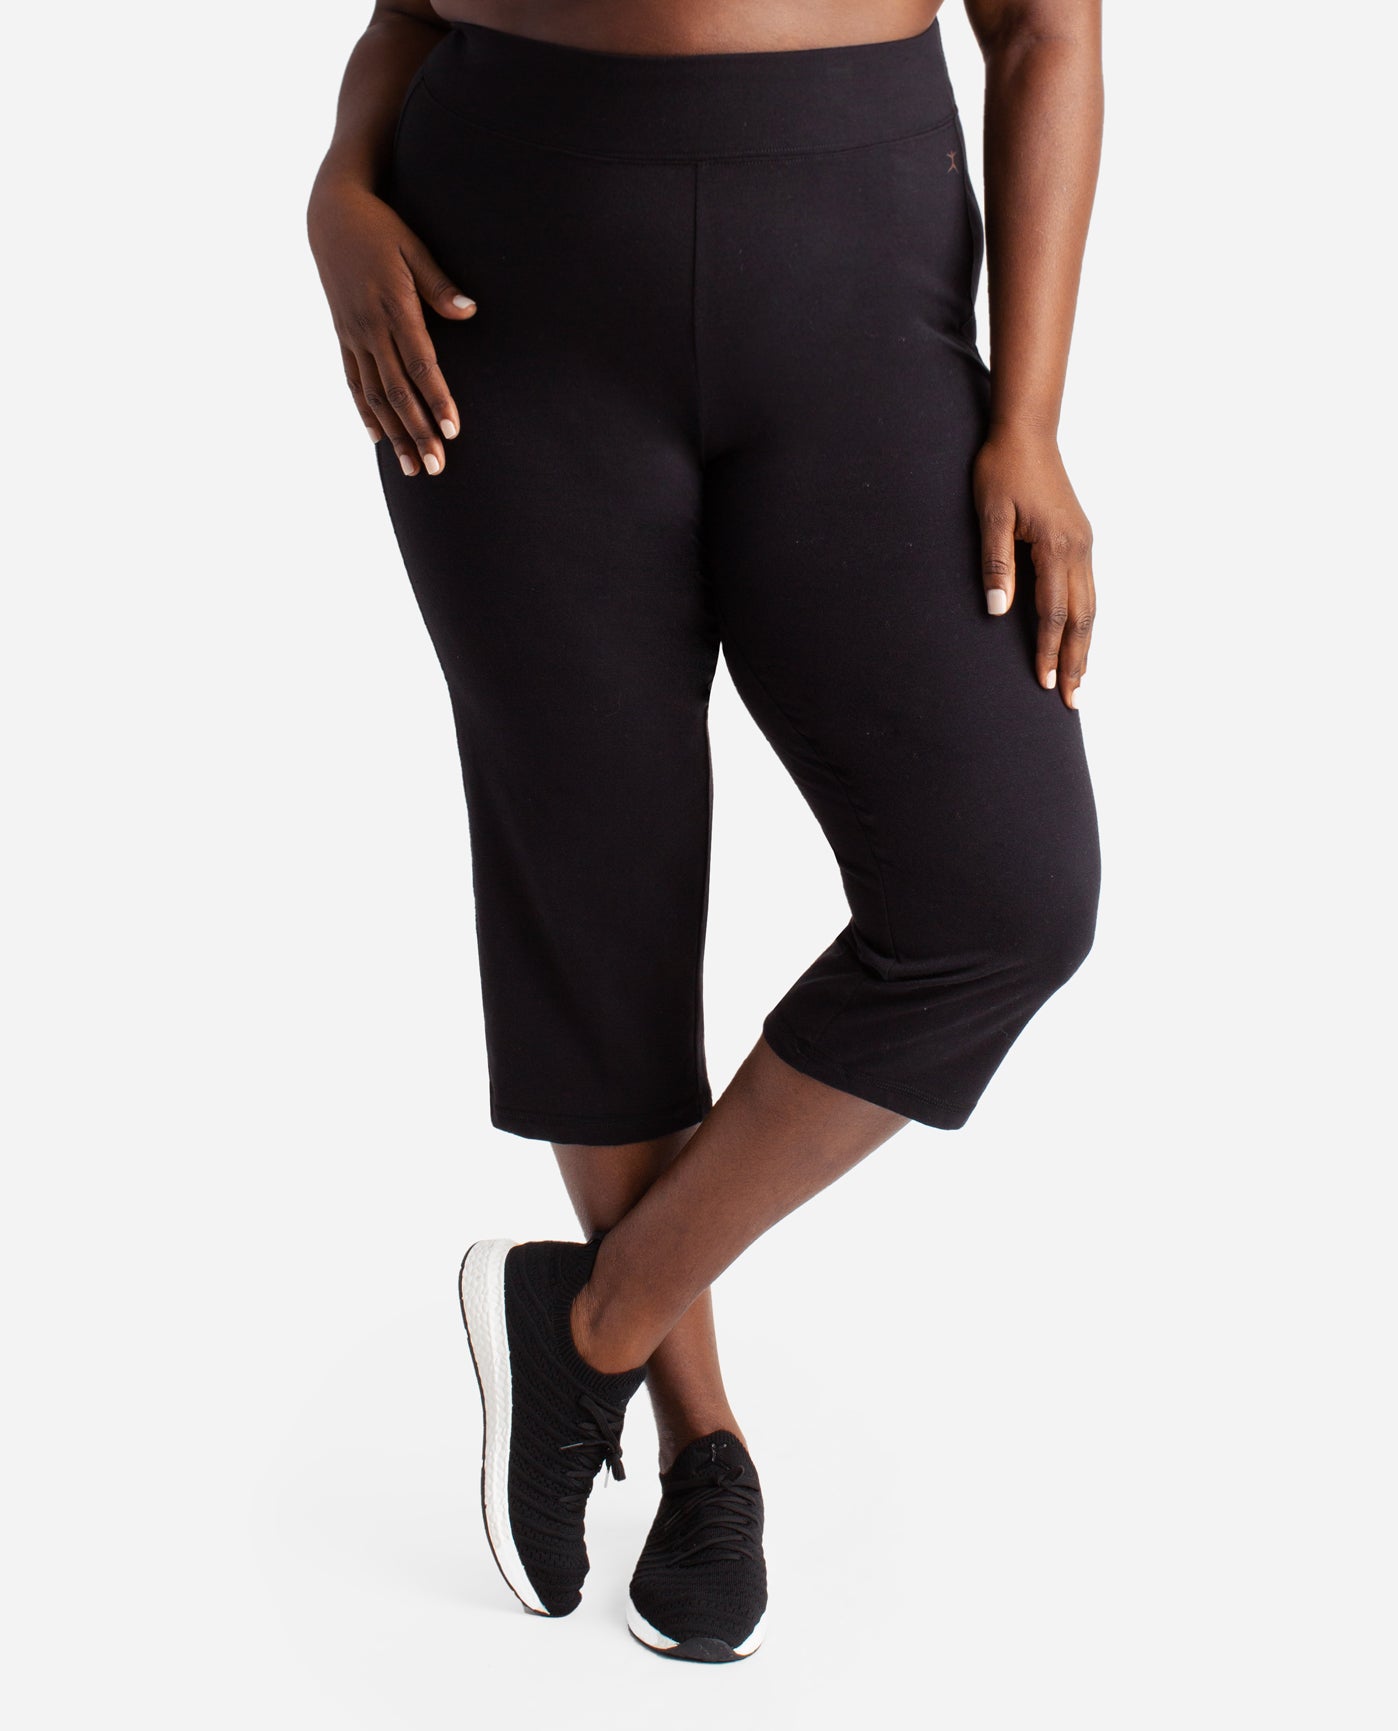 Danskin Now Women's Black Activewear Cotton Blend Stretch Cropped